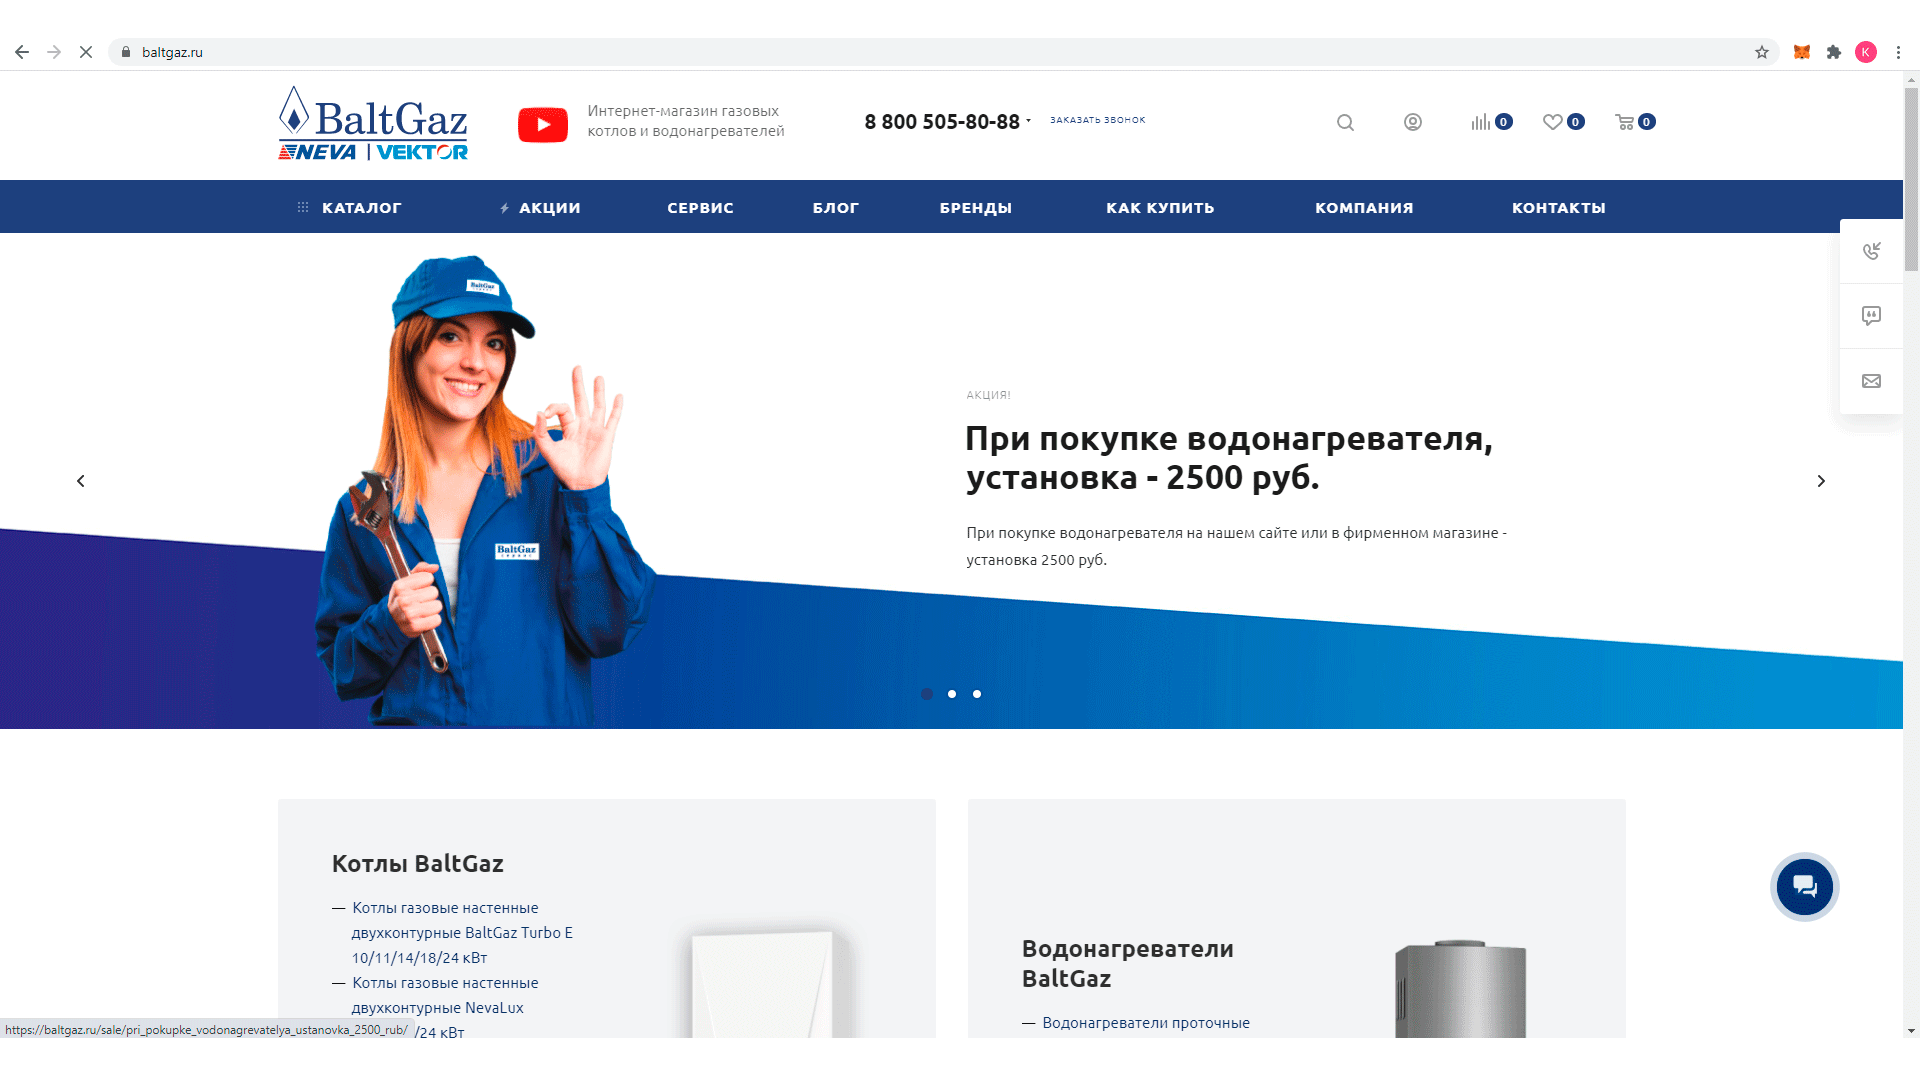 Леди сайт спб. Петербург интернет магазин в цене.